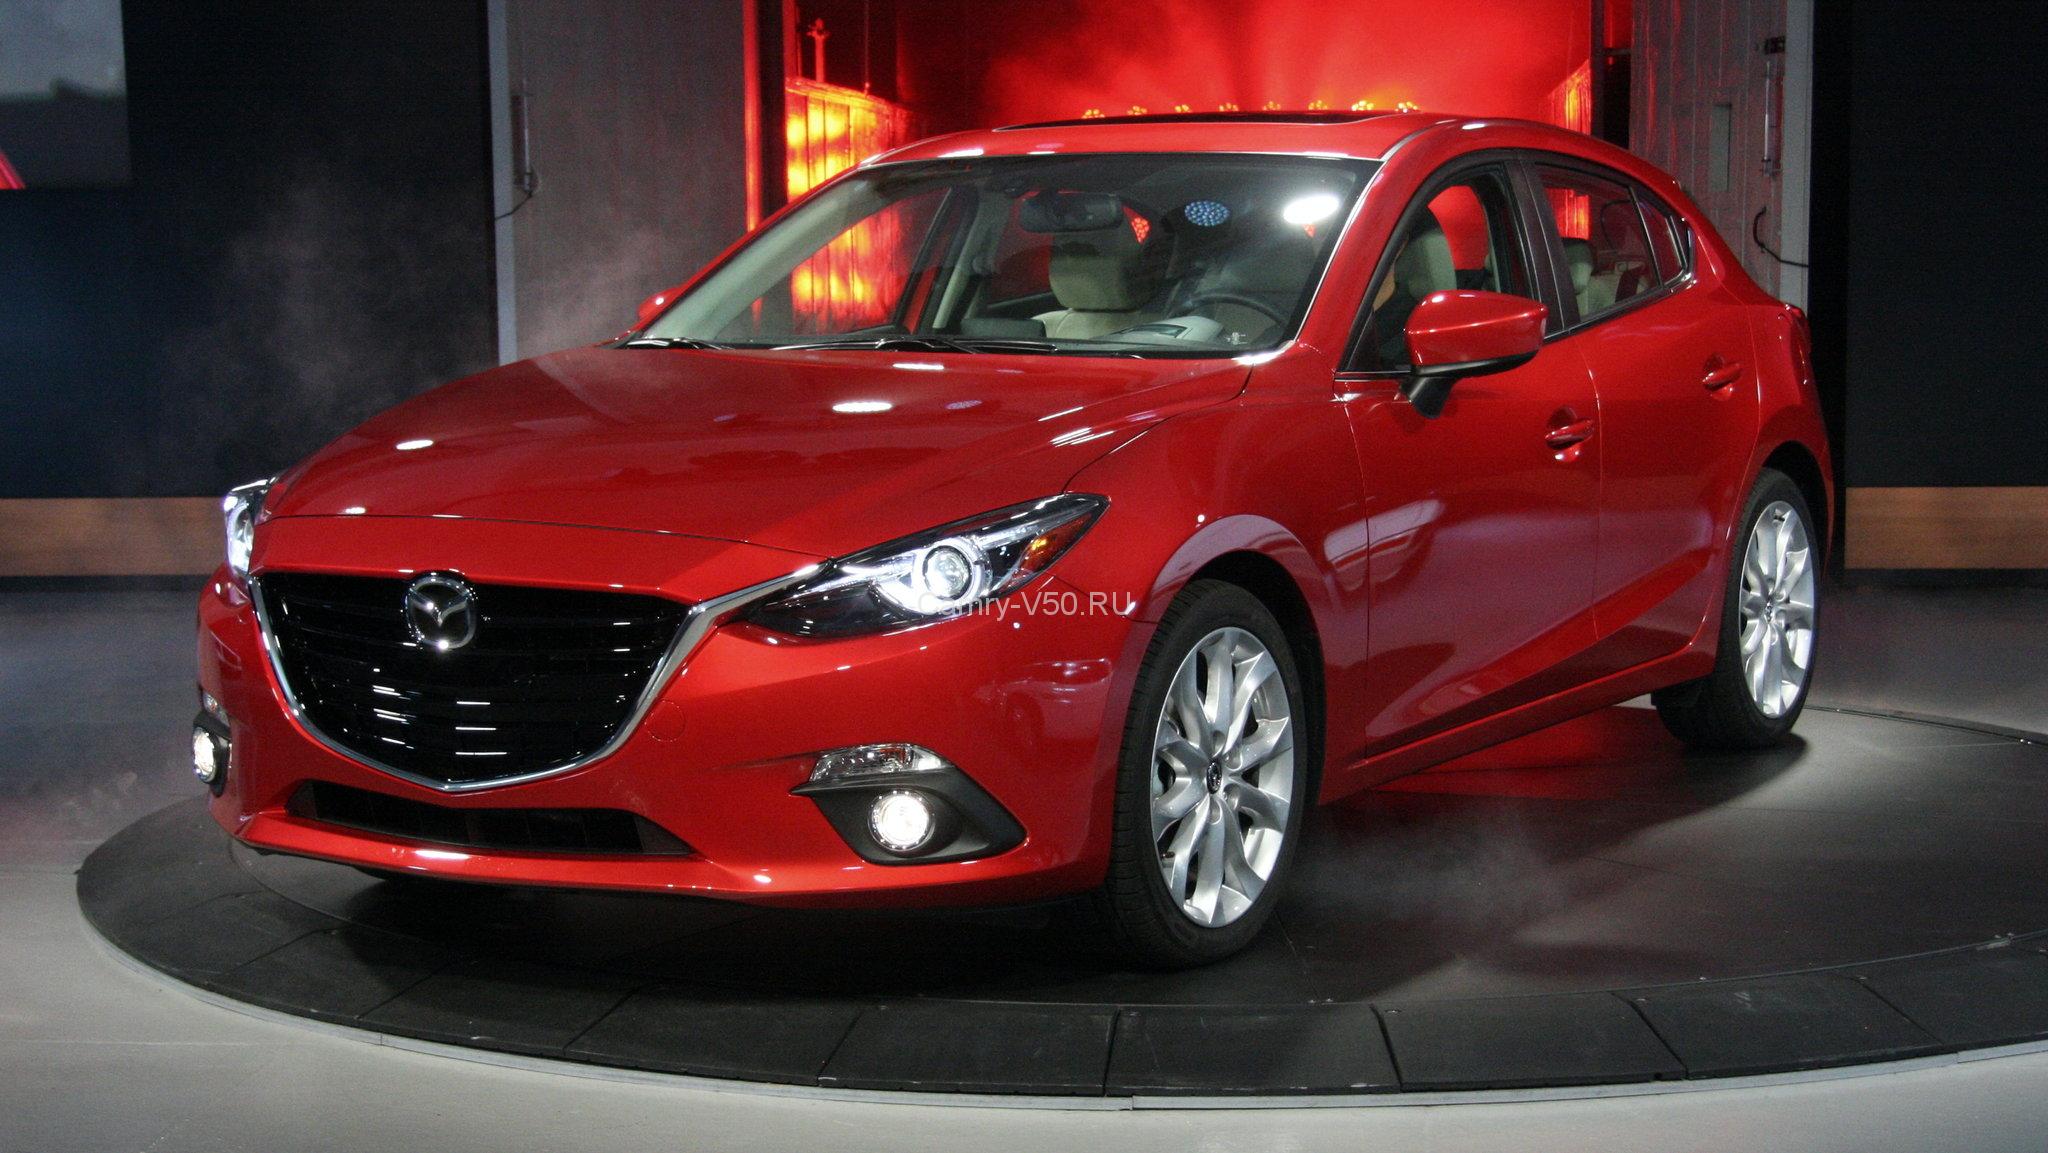 Mazda купить цена. Mazda Mazda 3 2014. Мазда 3 хэтчбек 2014г. Мазда 3 новая комплектация. Мазда 3 кузова.